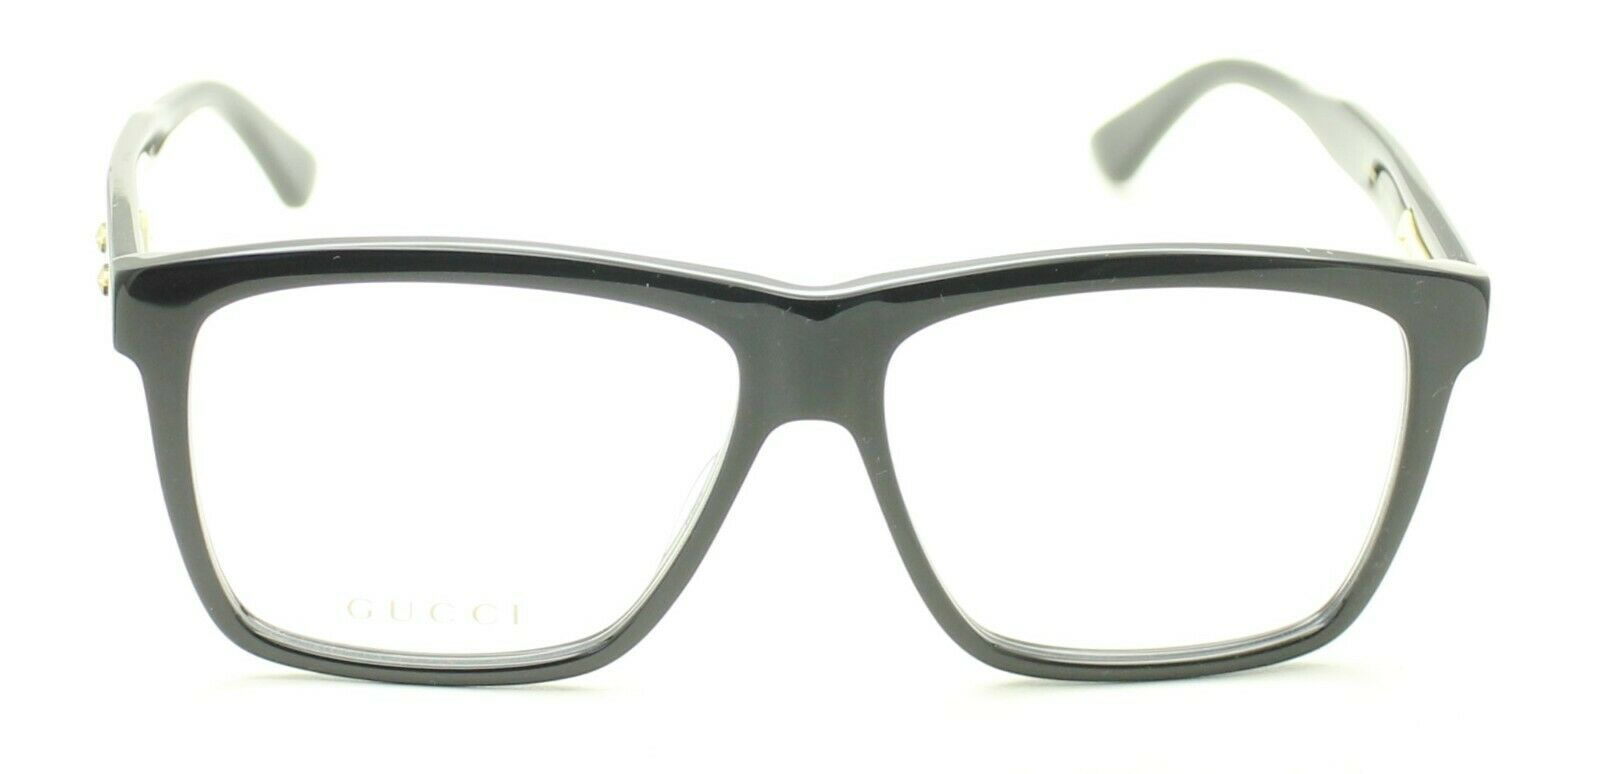 GUCCI GG 0268O 006 57mm Eyewear FRAMES Glasses RX Optical Eyeglasses New - Japan